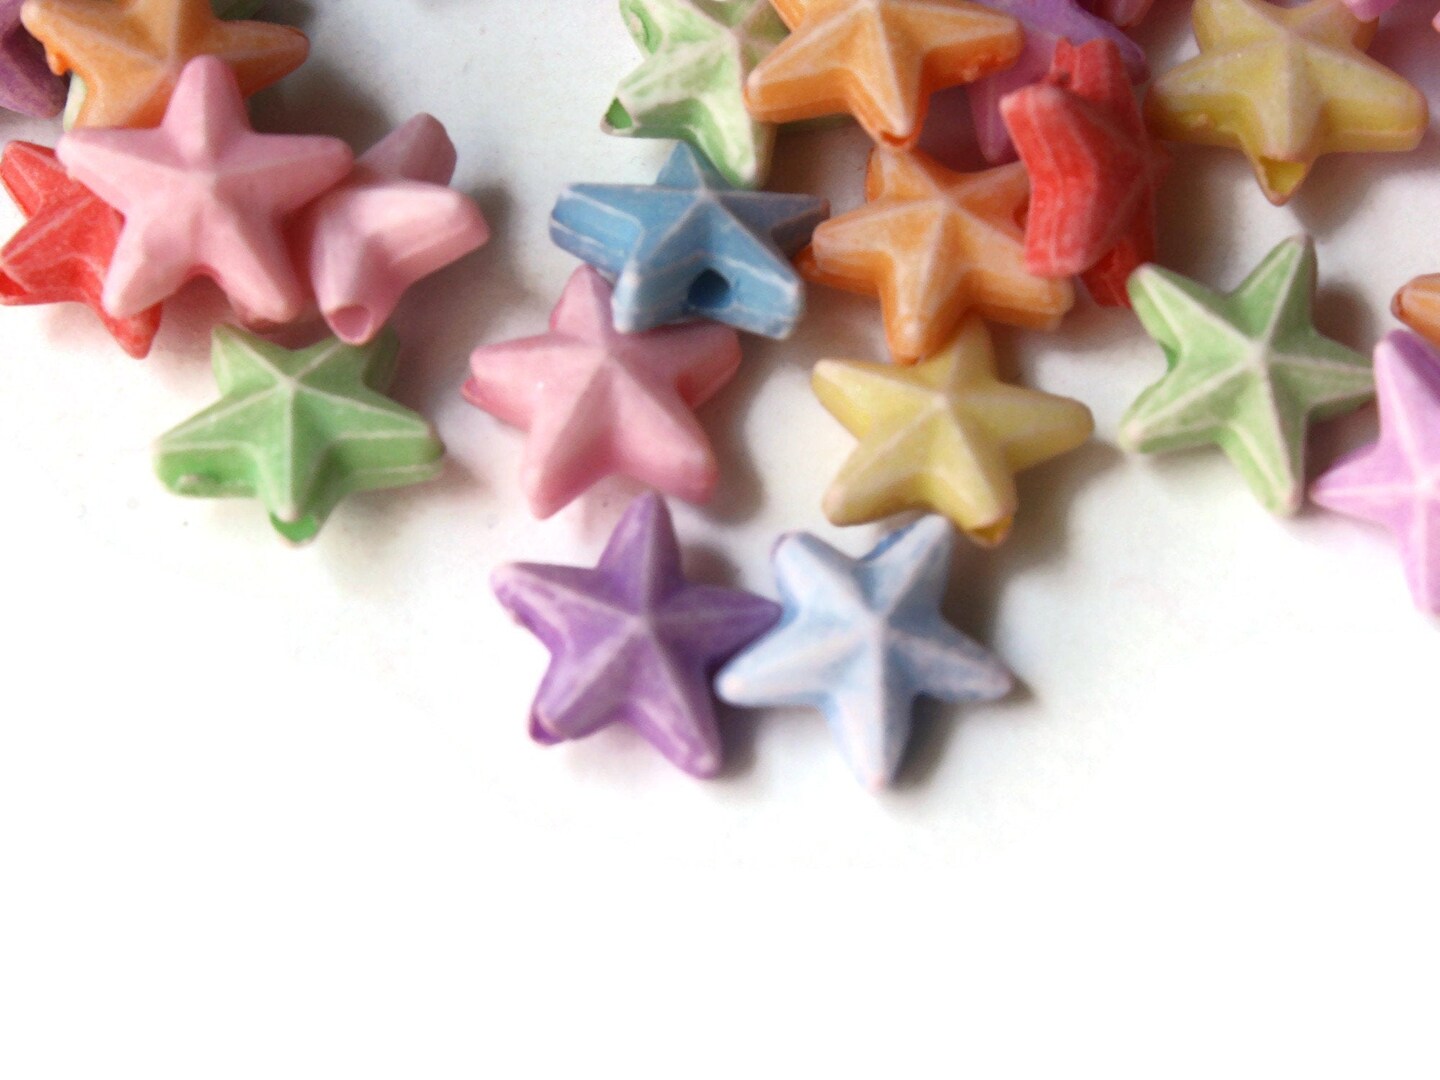 Beads MIX - starBEADS